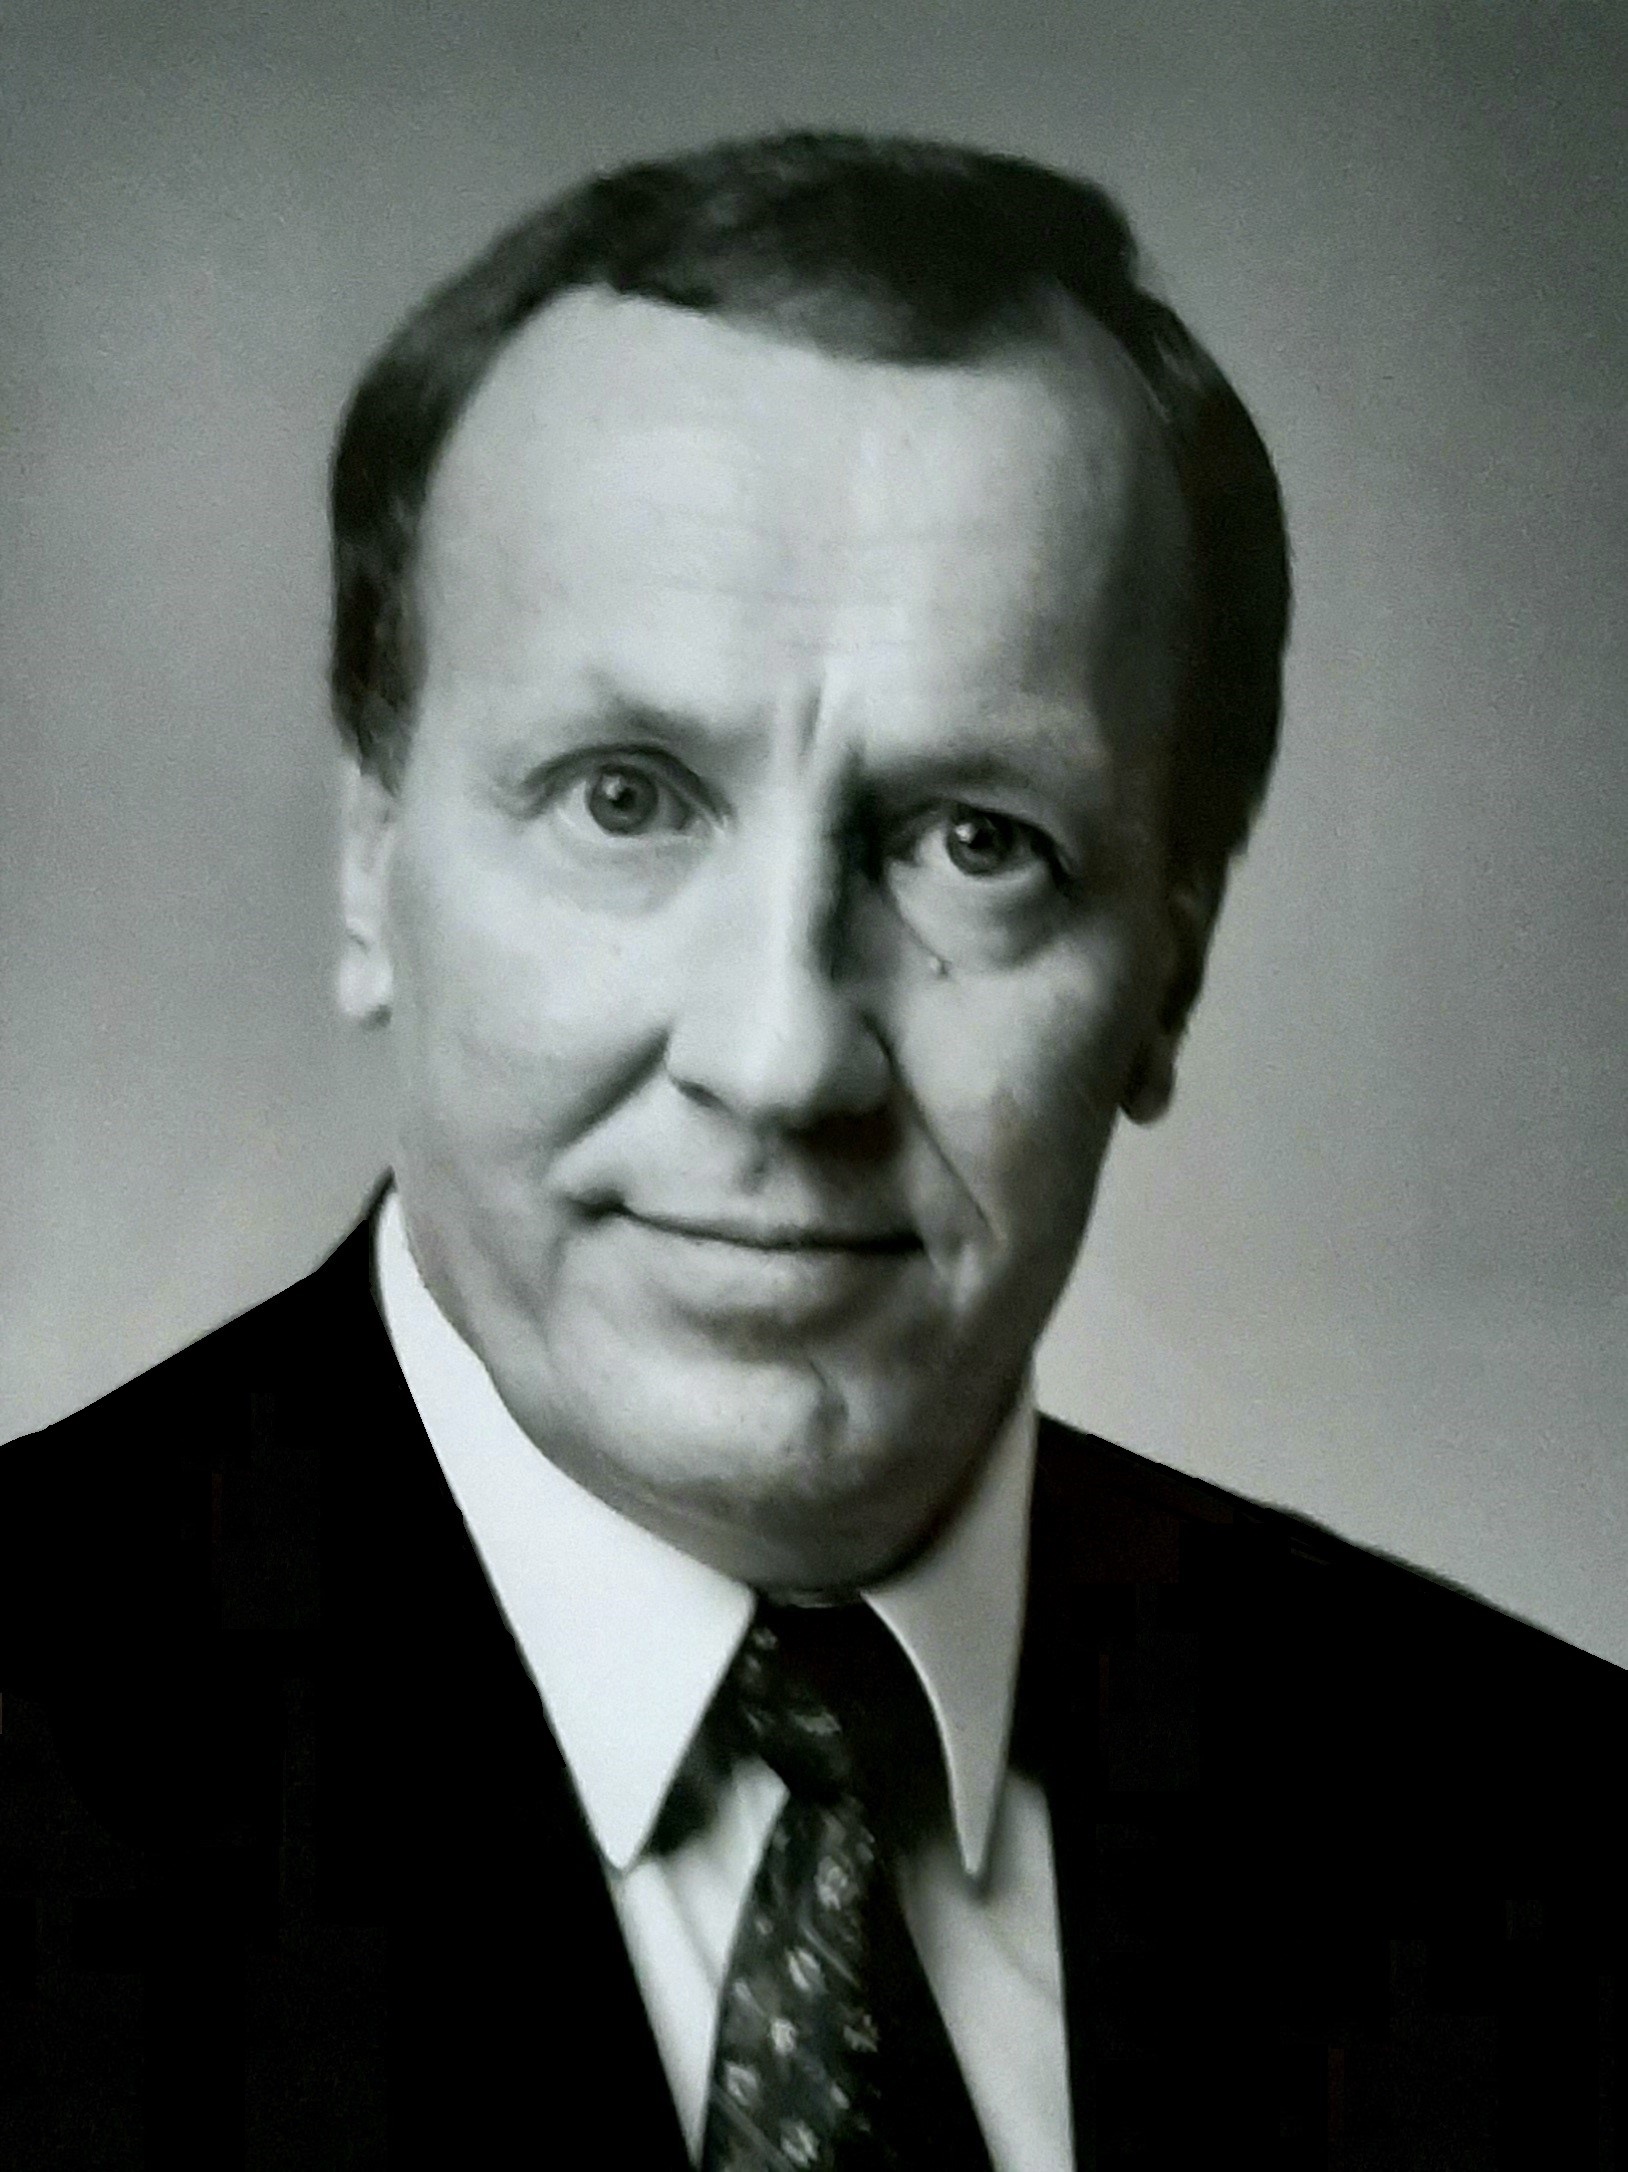 Ilari Rantakari was an ambassador of Finland in Tanzania 1994-1998.